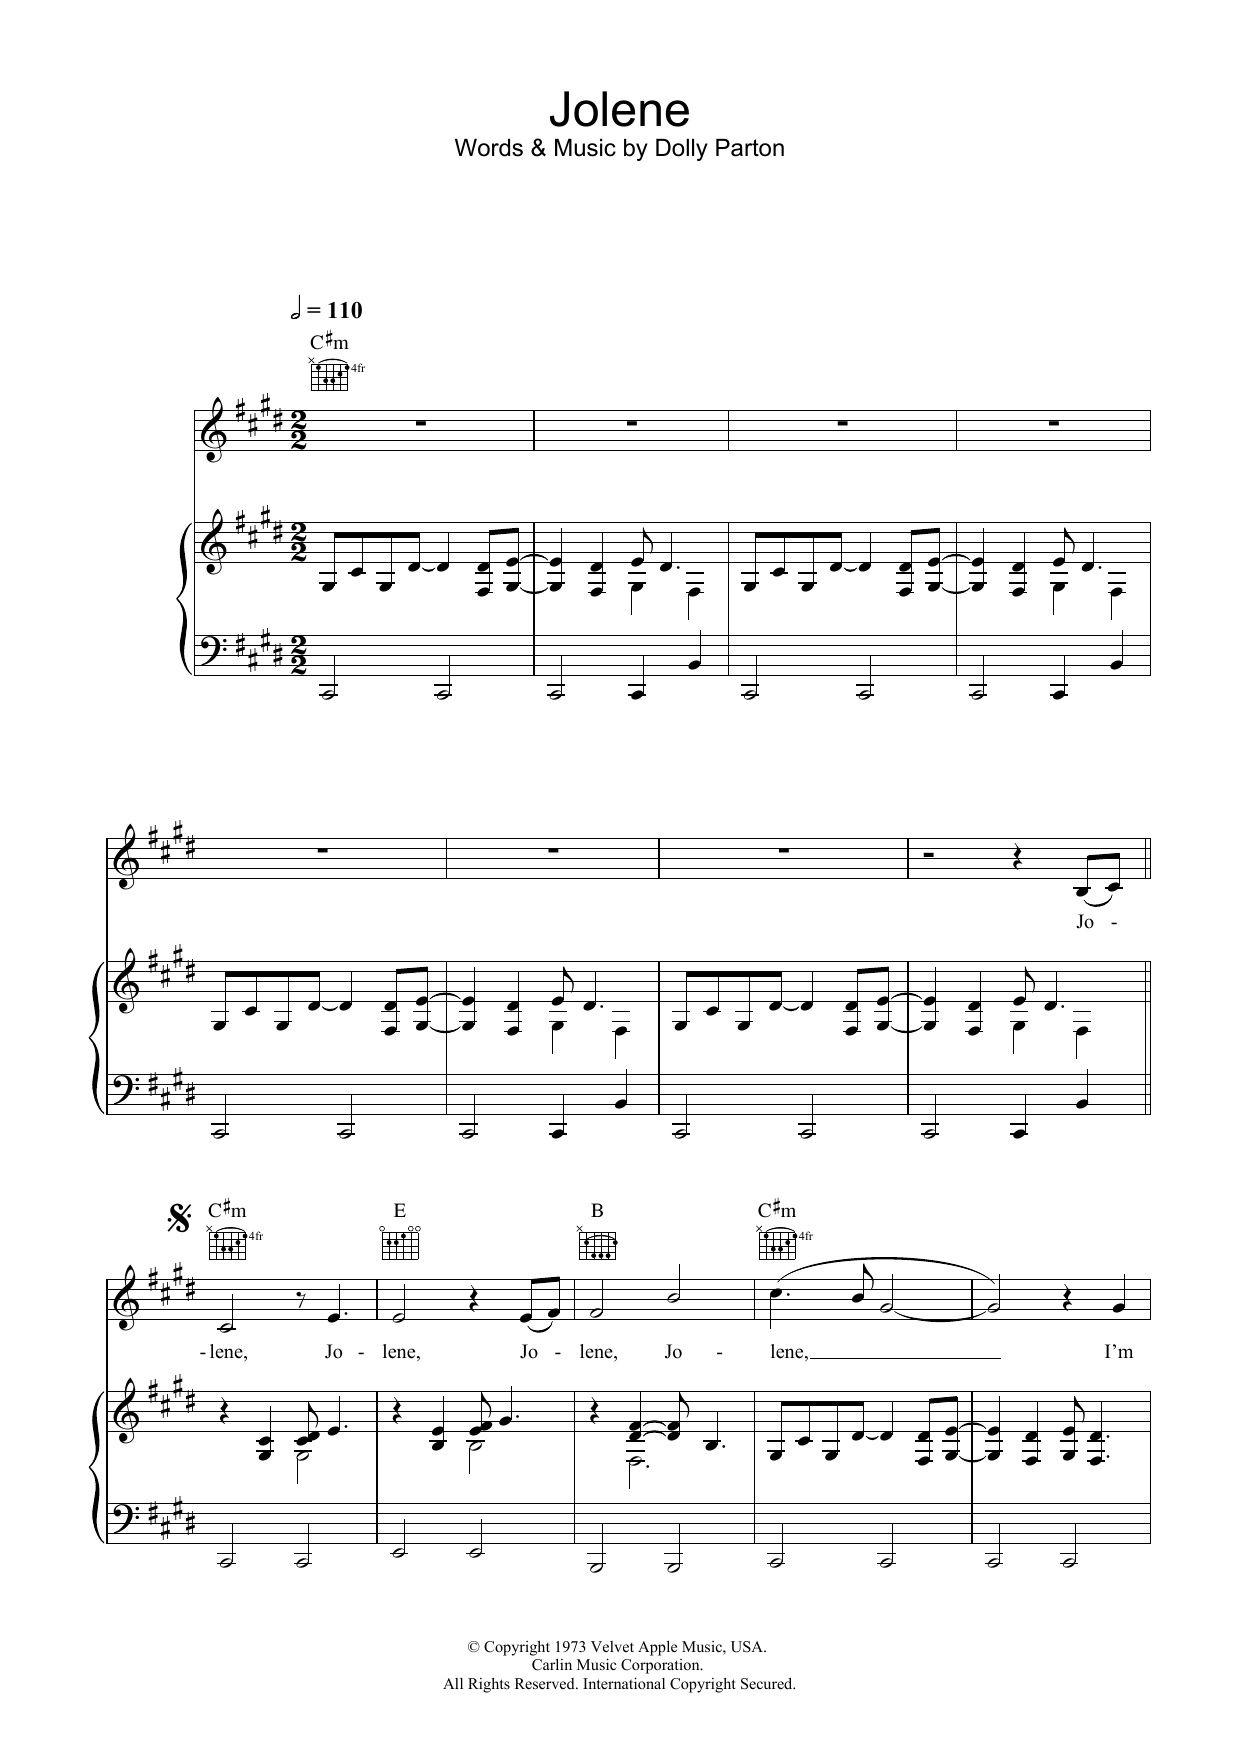 Dolly Parton Jolene Sheet Music Notes & Chords for Banjo Tab - Download or Print PDF